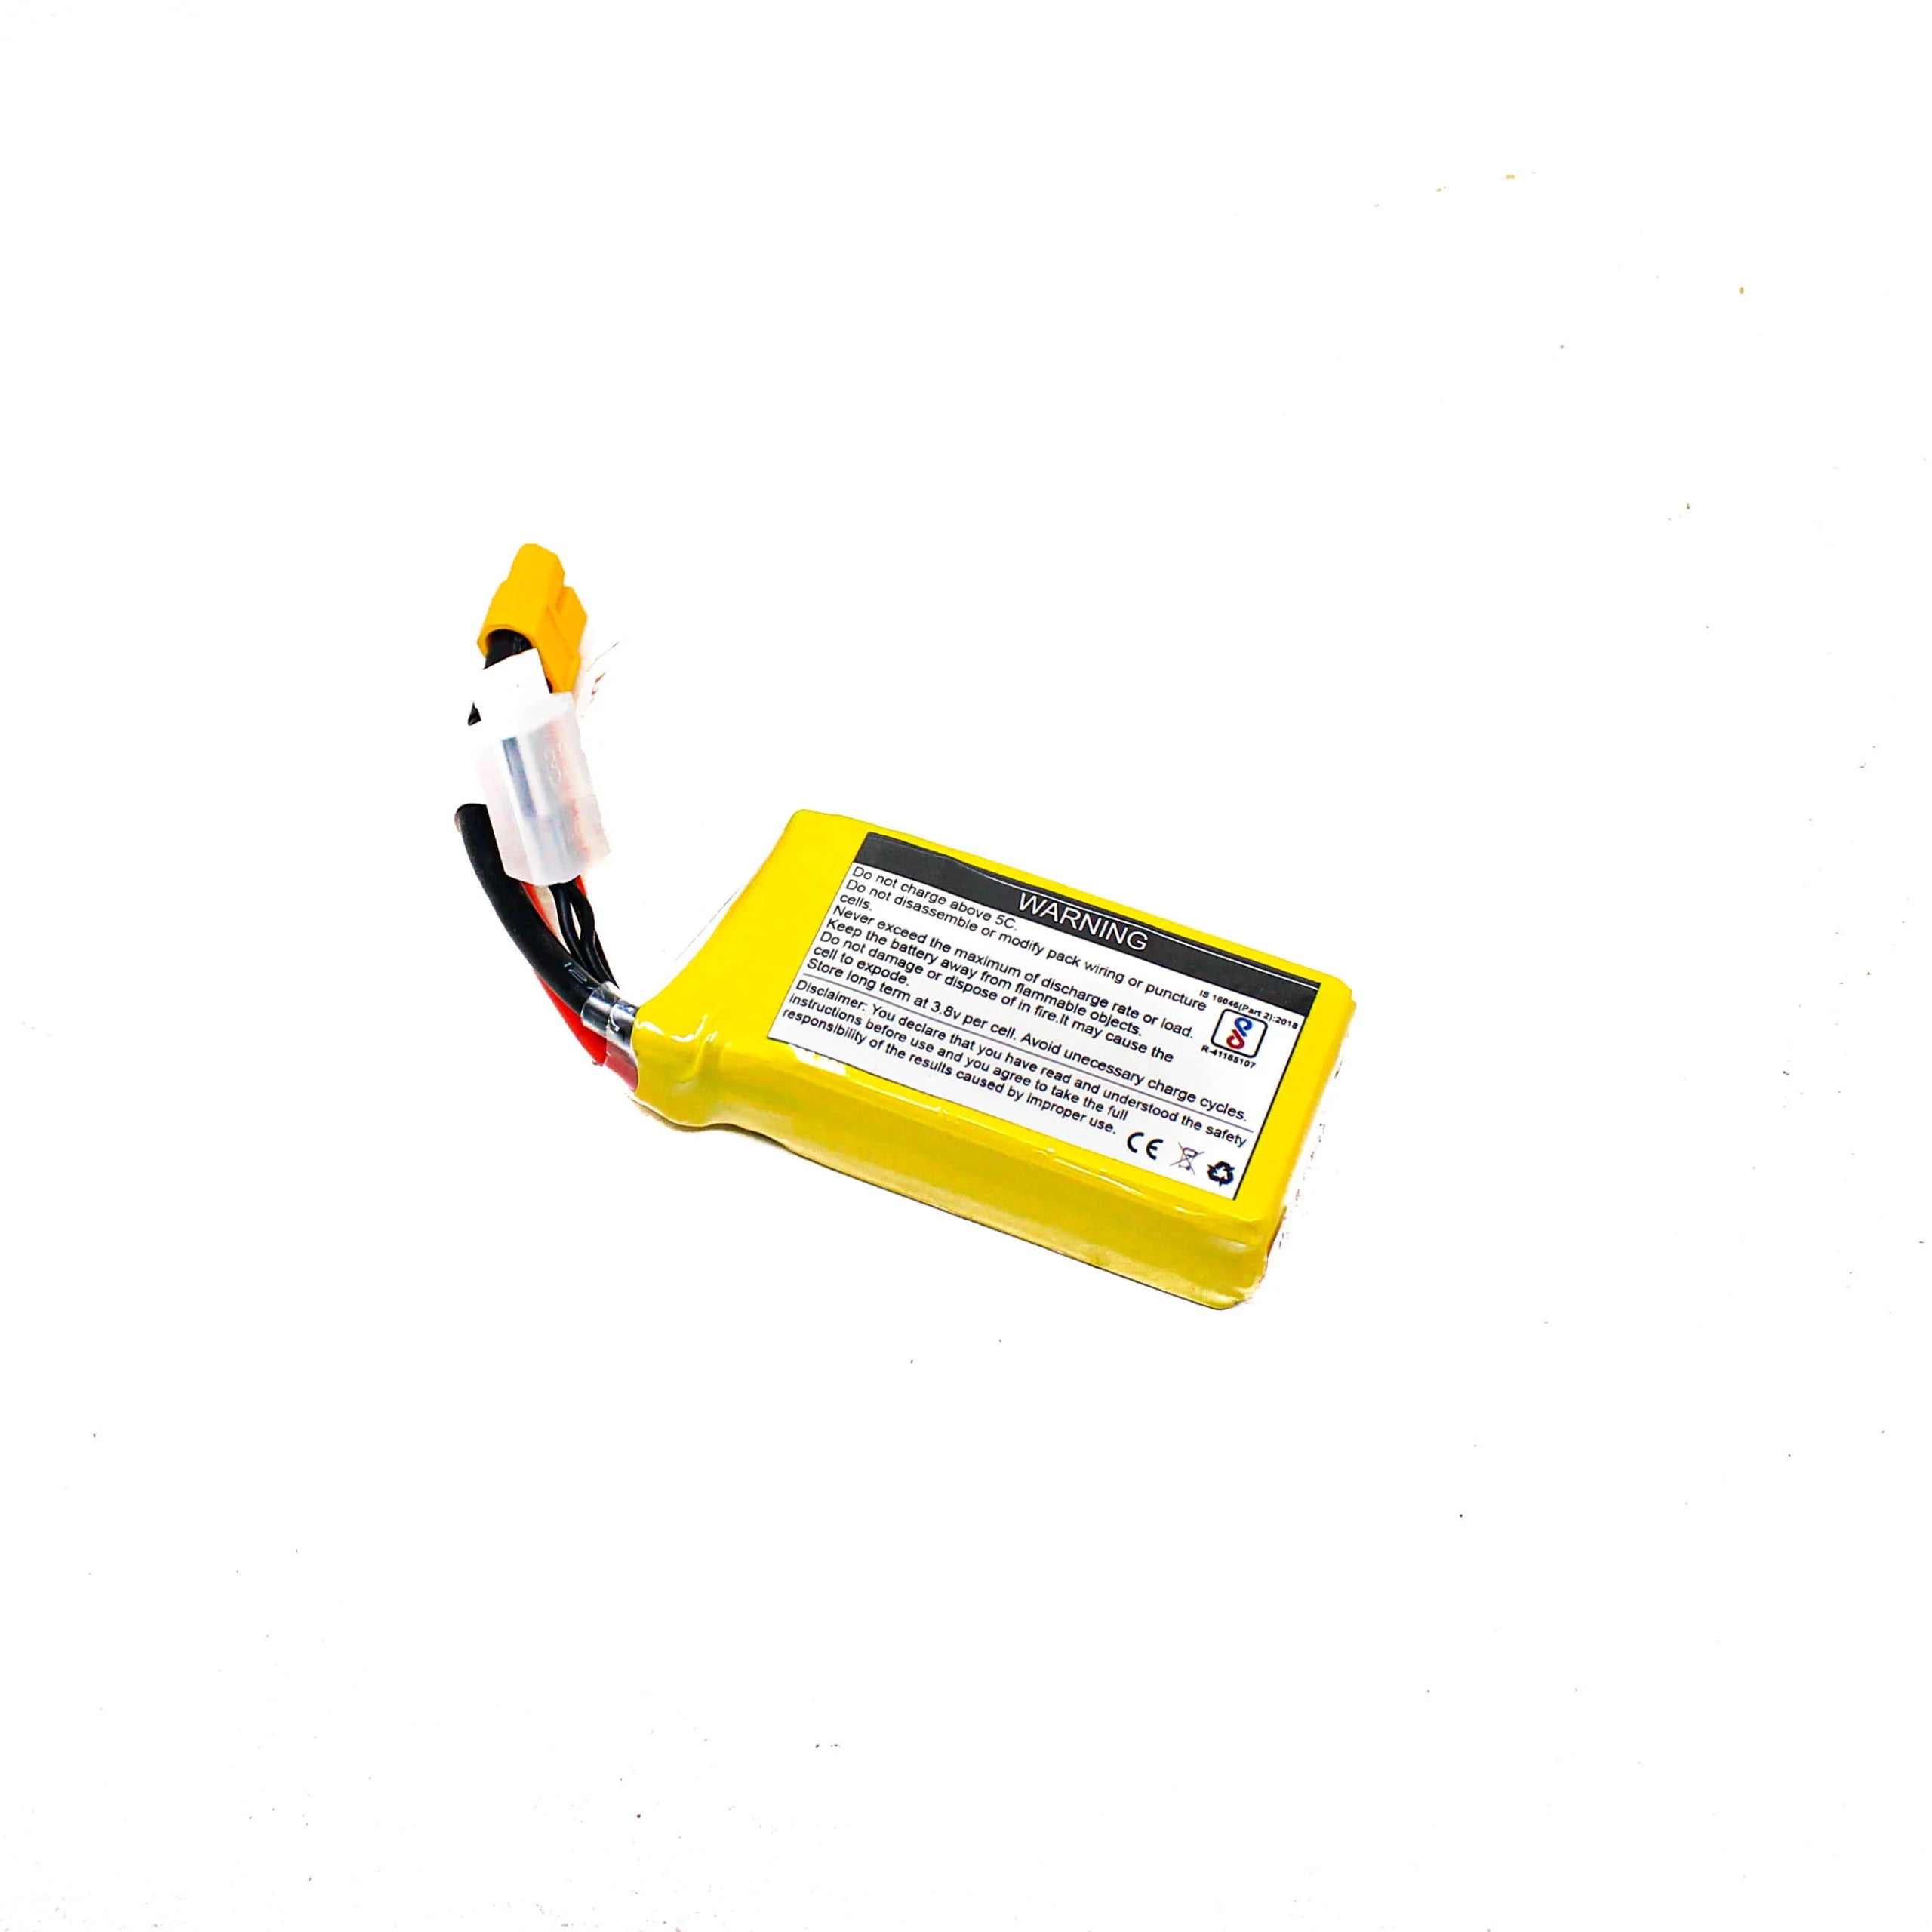 Lemon LIPO 1550mAh 3S 45C/90C Lithium Polymer Battery Pack